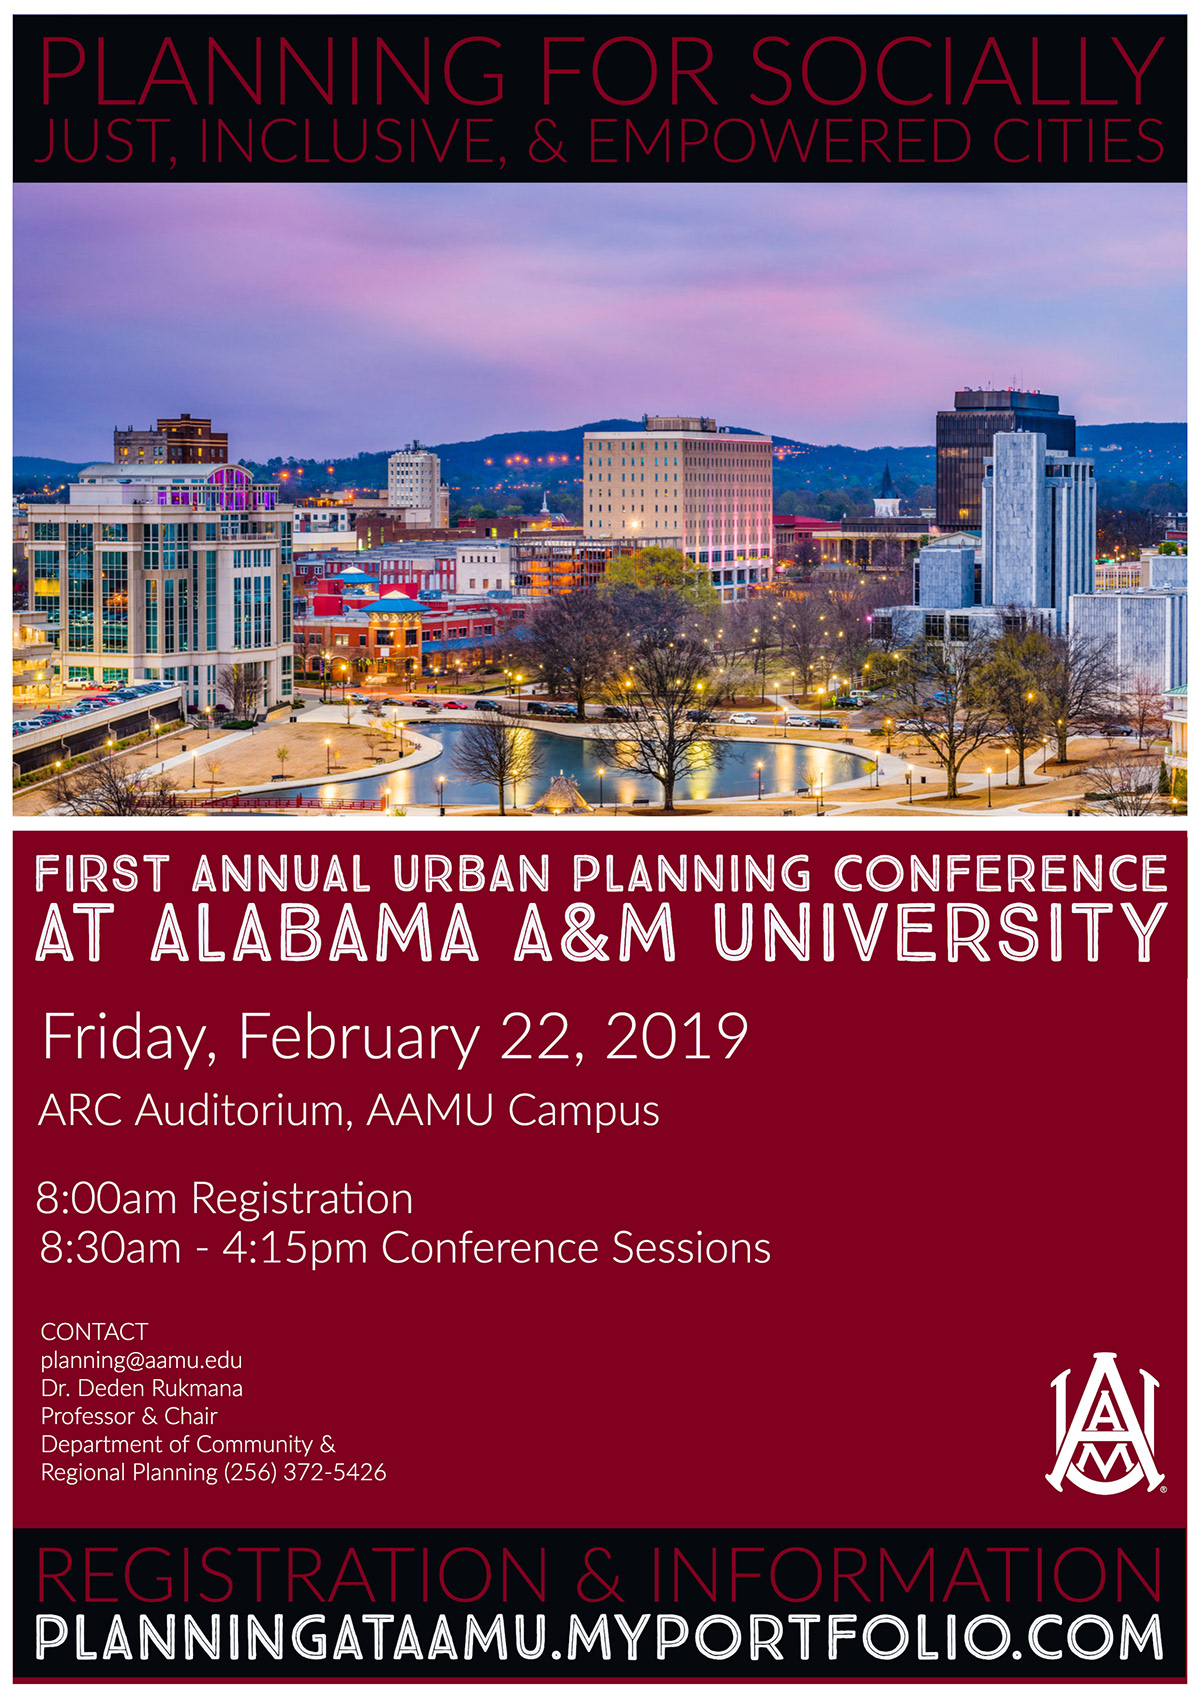 AAMU Urban Planning Conference Program